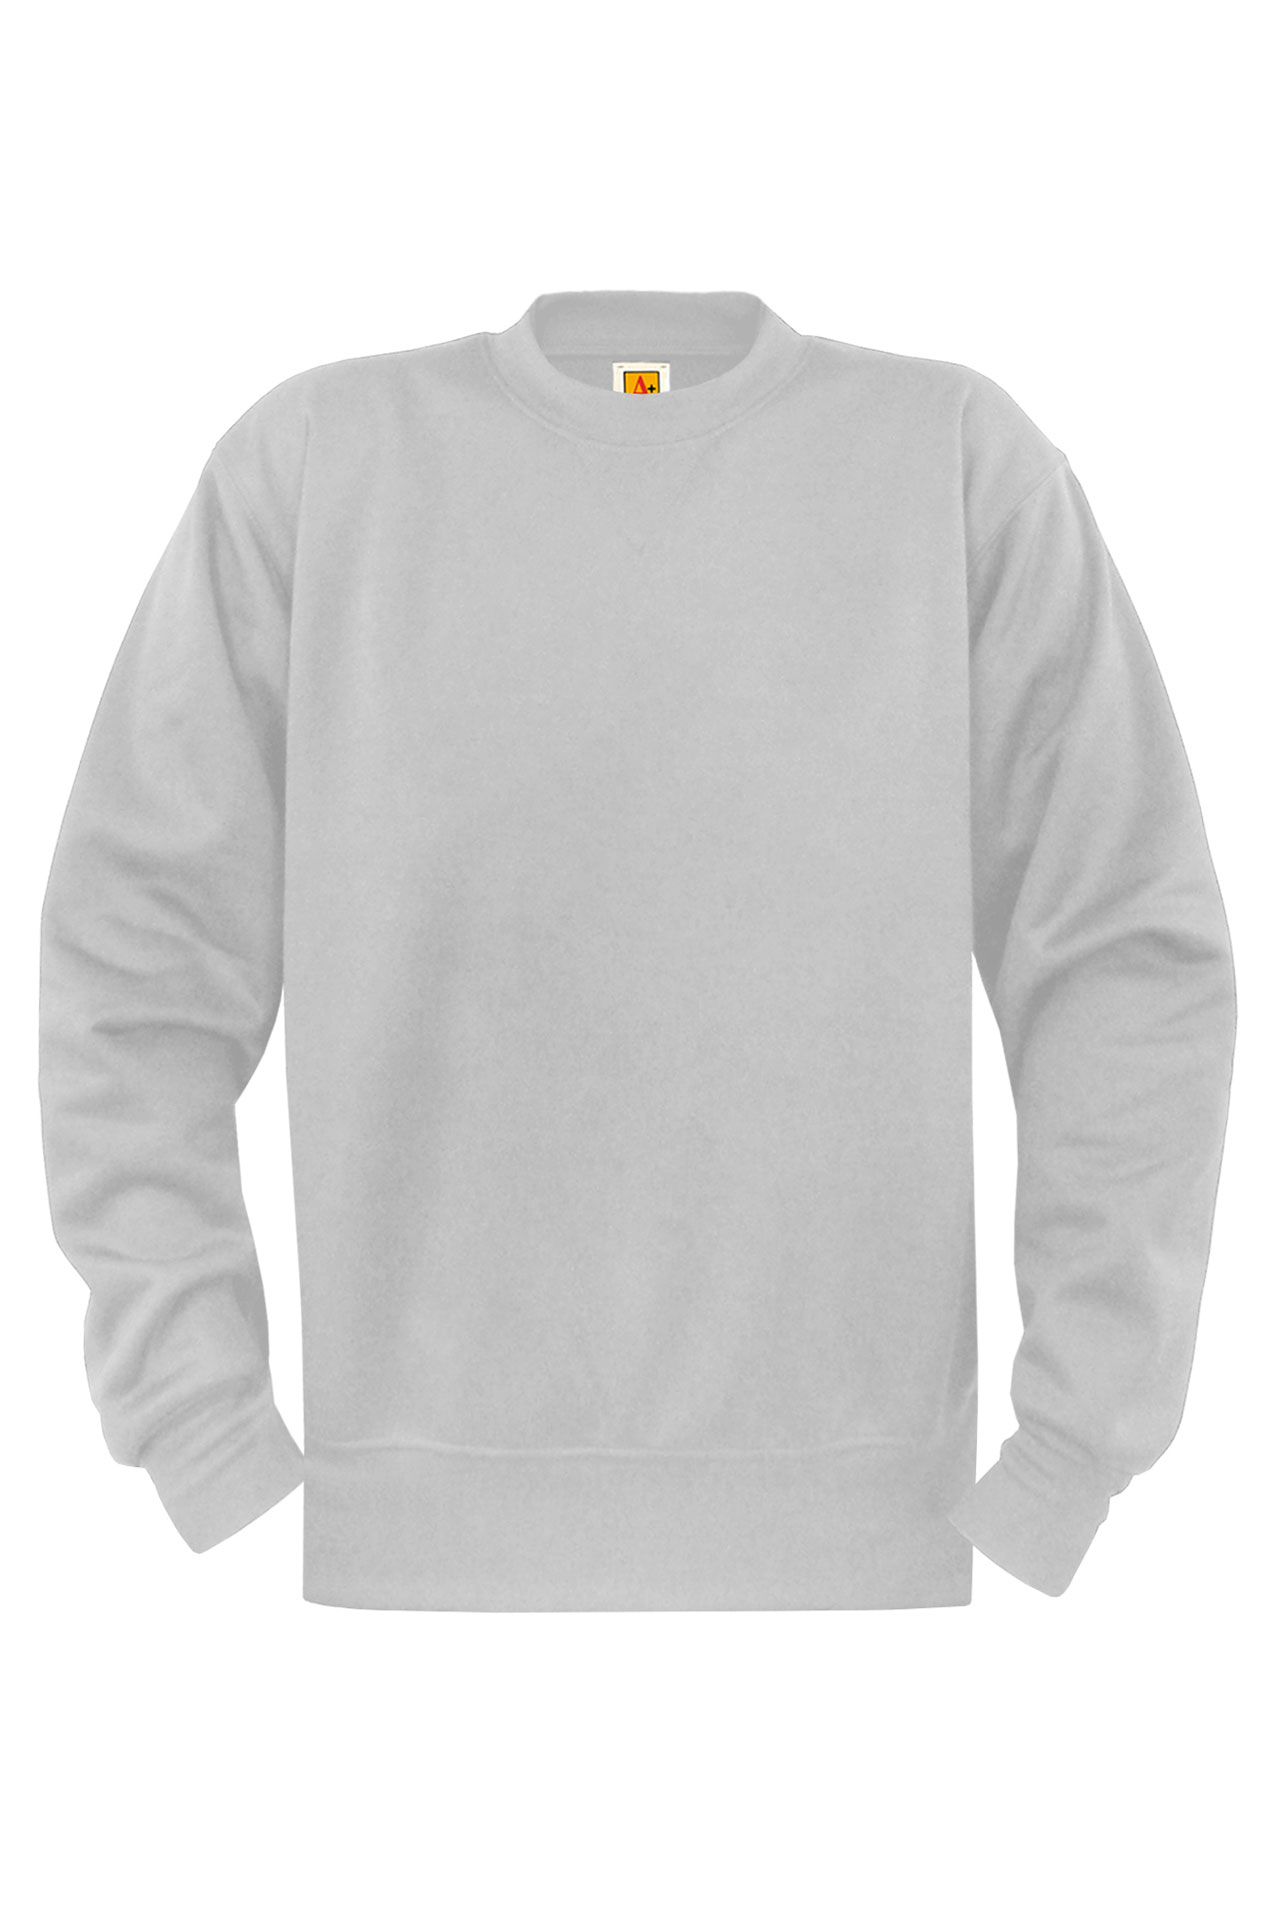 Unisex Crewneck Performance Fleece Sweatshirt-A Plus